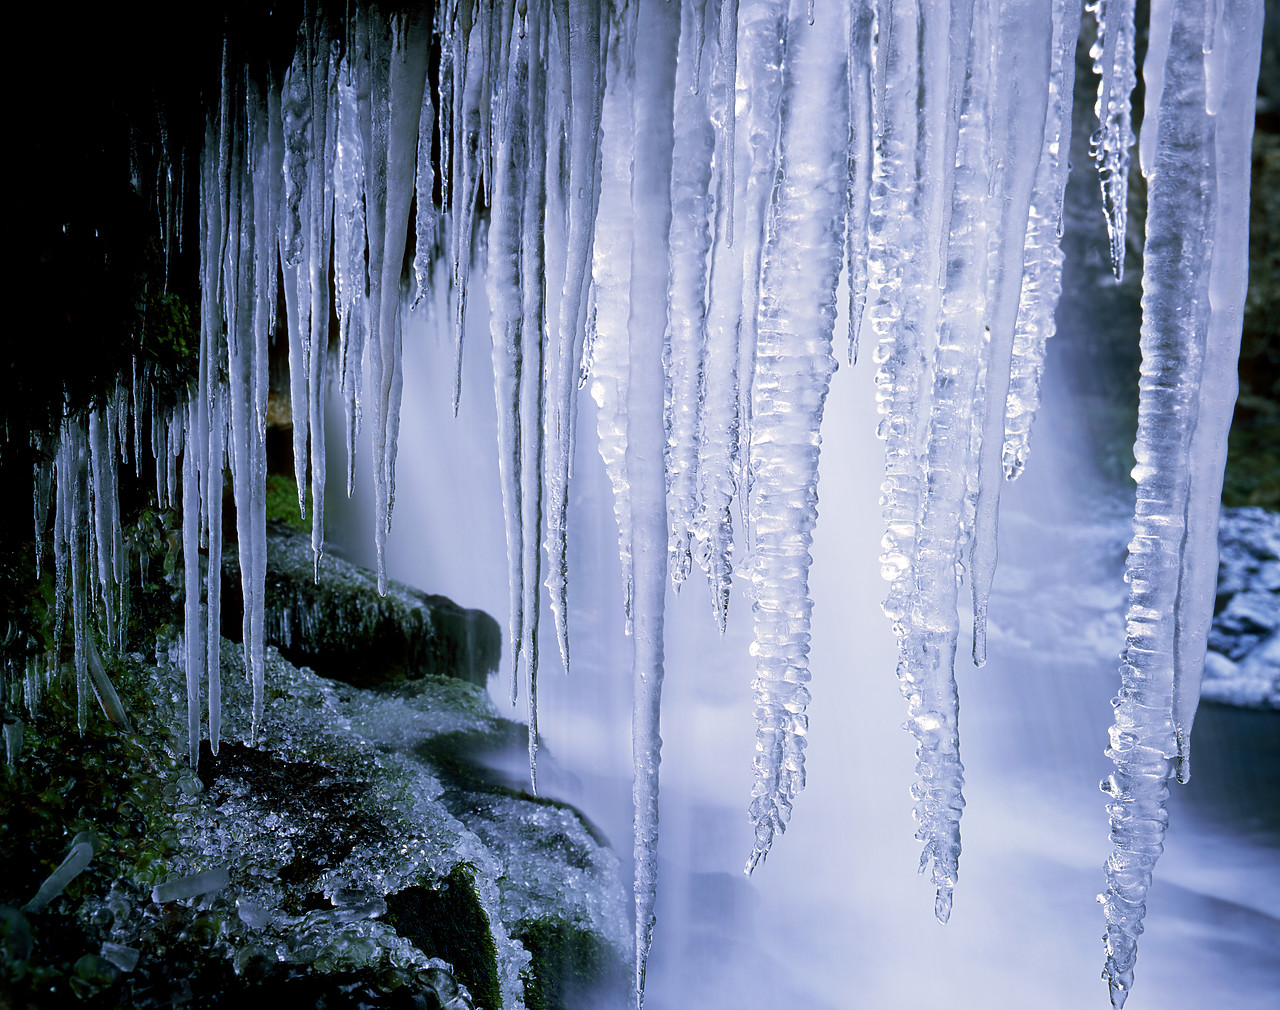 #040009-2 - Icicles & West Burton Falls, North Yorkshire, England